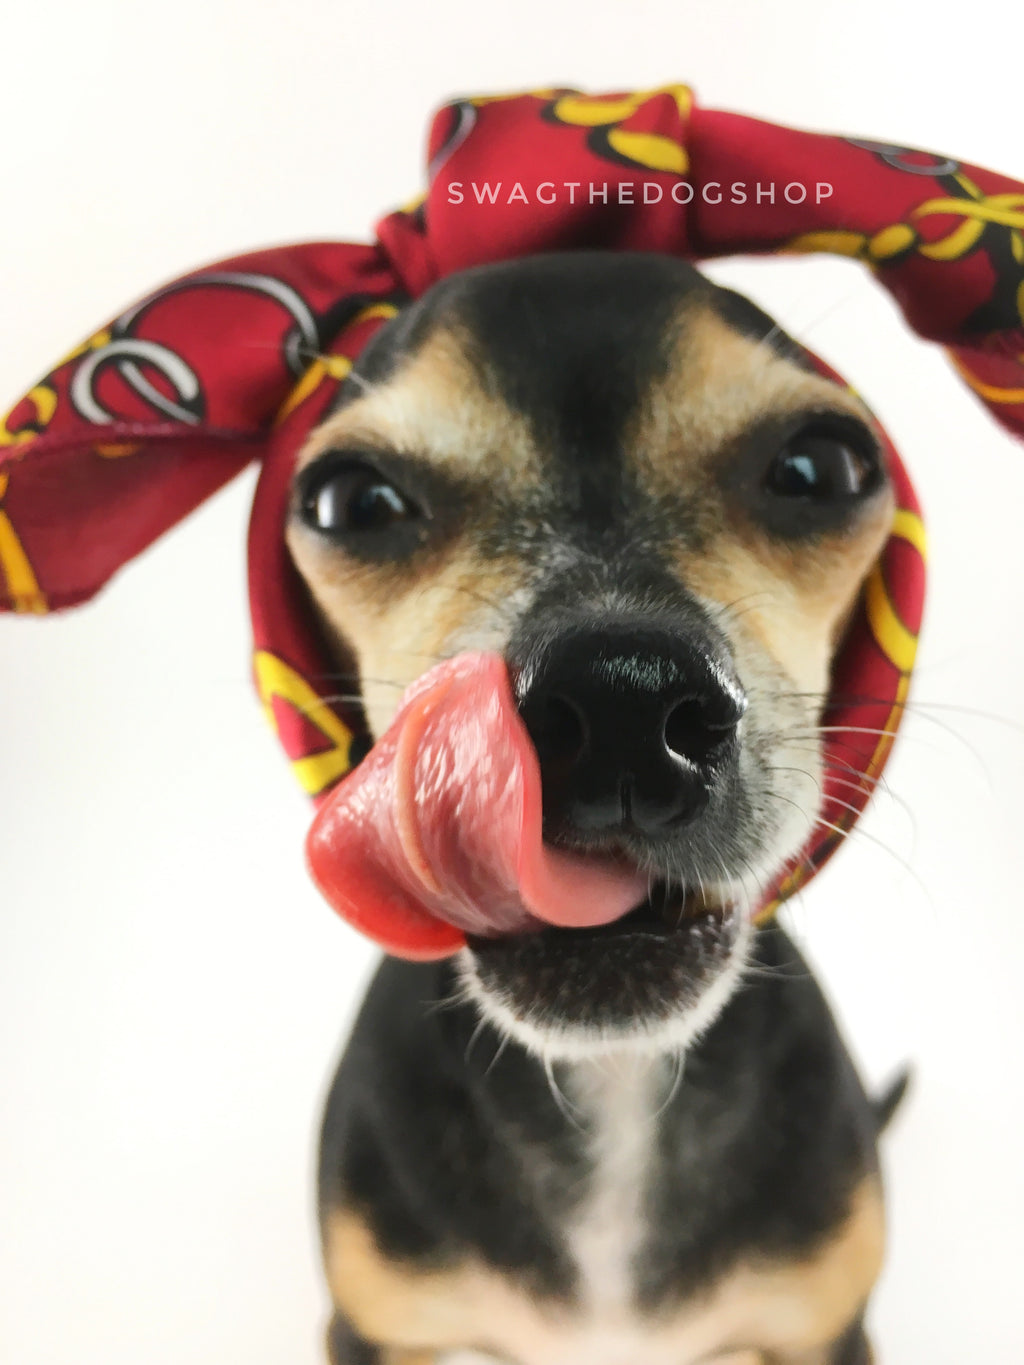 24K Burgundy Gold Swagdana Scarf - Bust of Cute Chihuahua sticking his tongue out & Wearing Swagdana Scarf as Headband. Dog Bandana. Dog Scarf